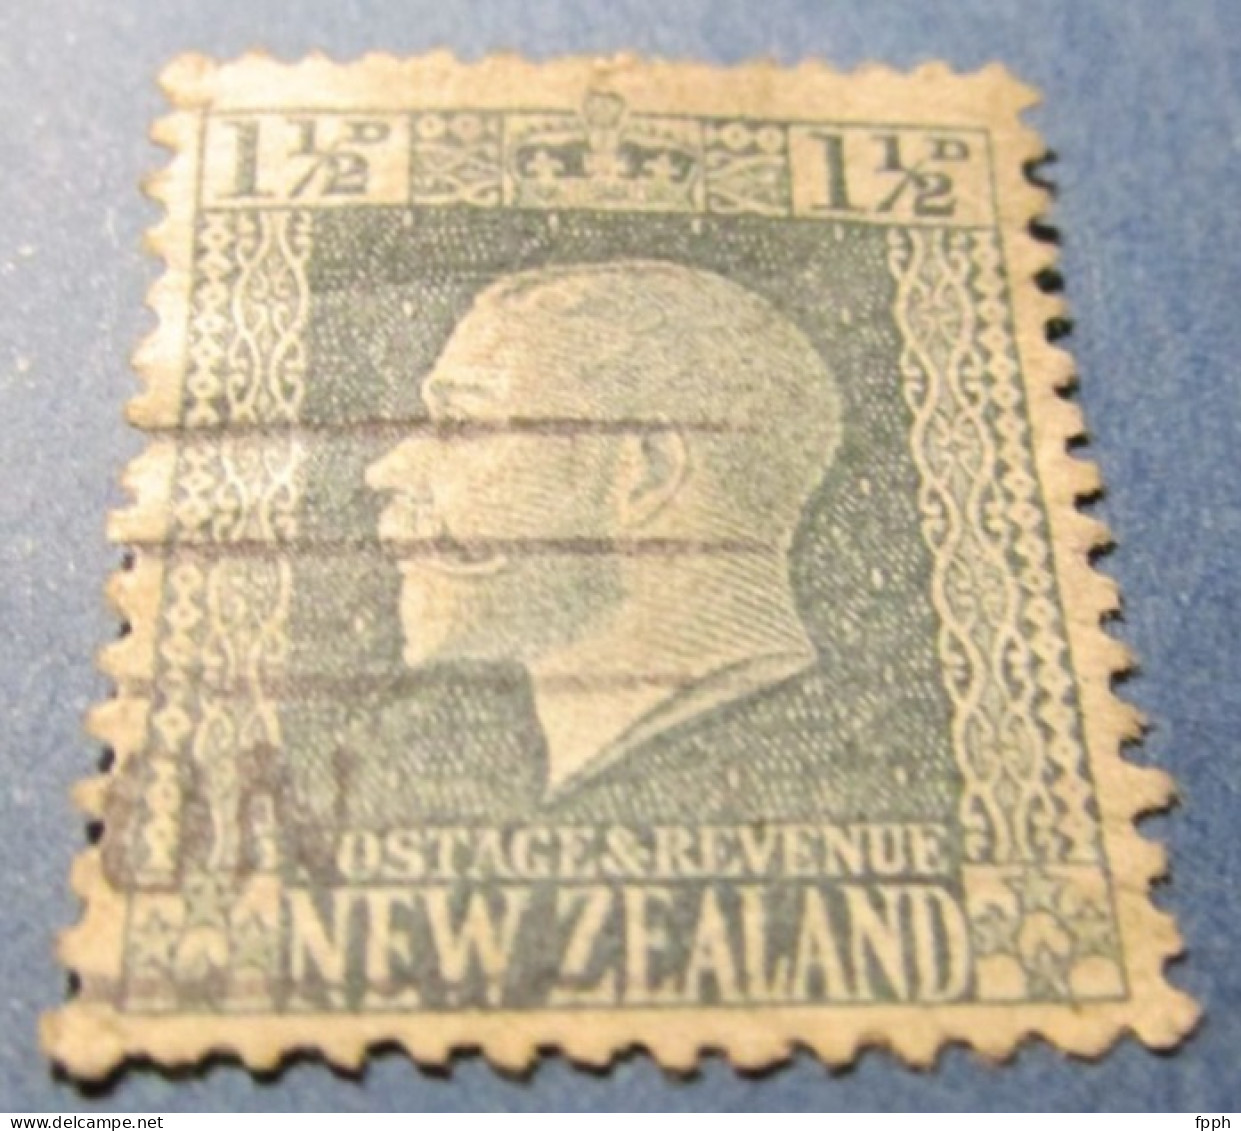 Timbre De Nouvelle Zélande - New Zealand - Georges V - Gebraucht